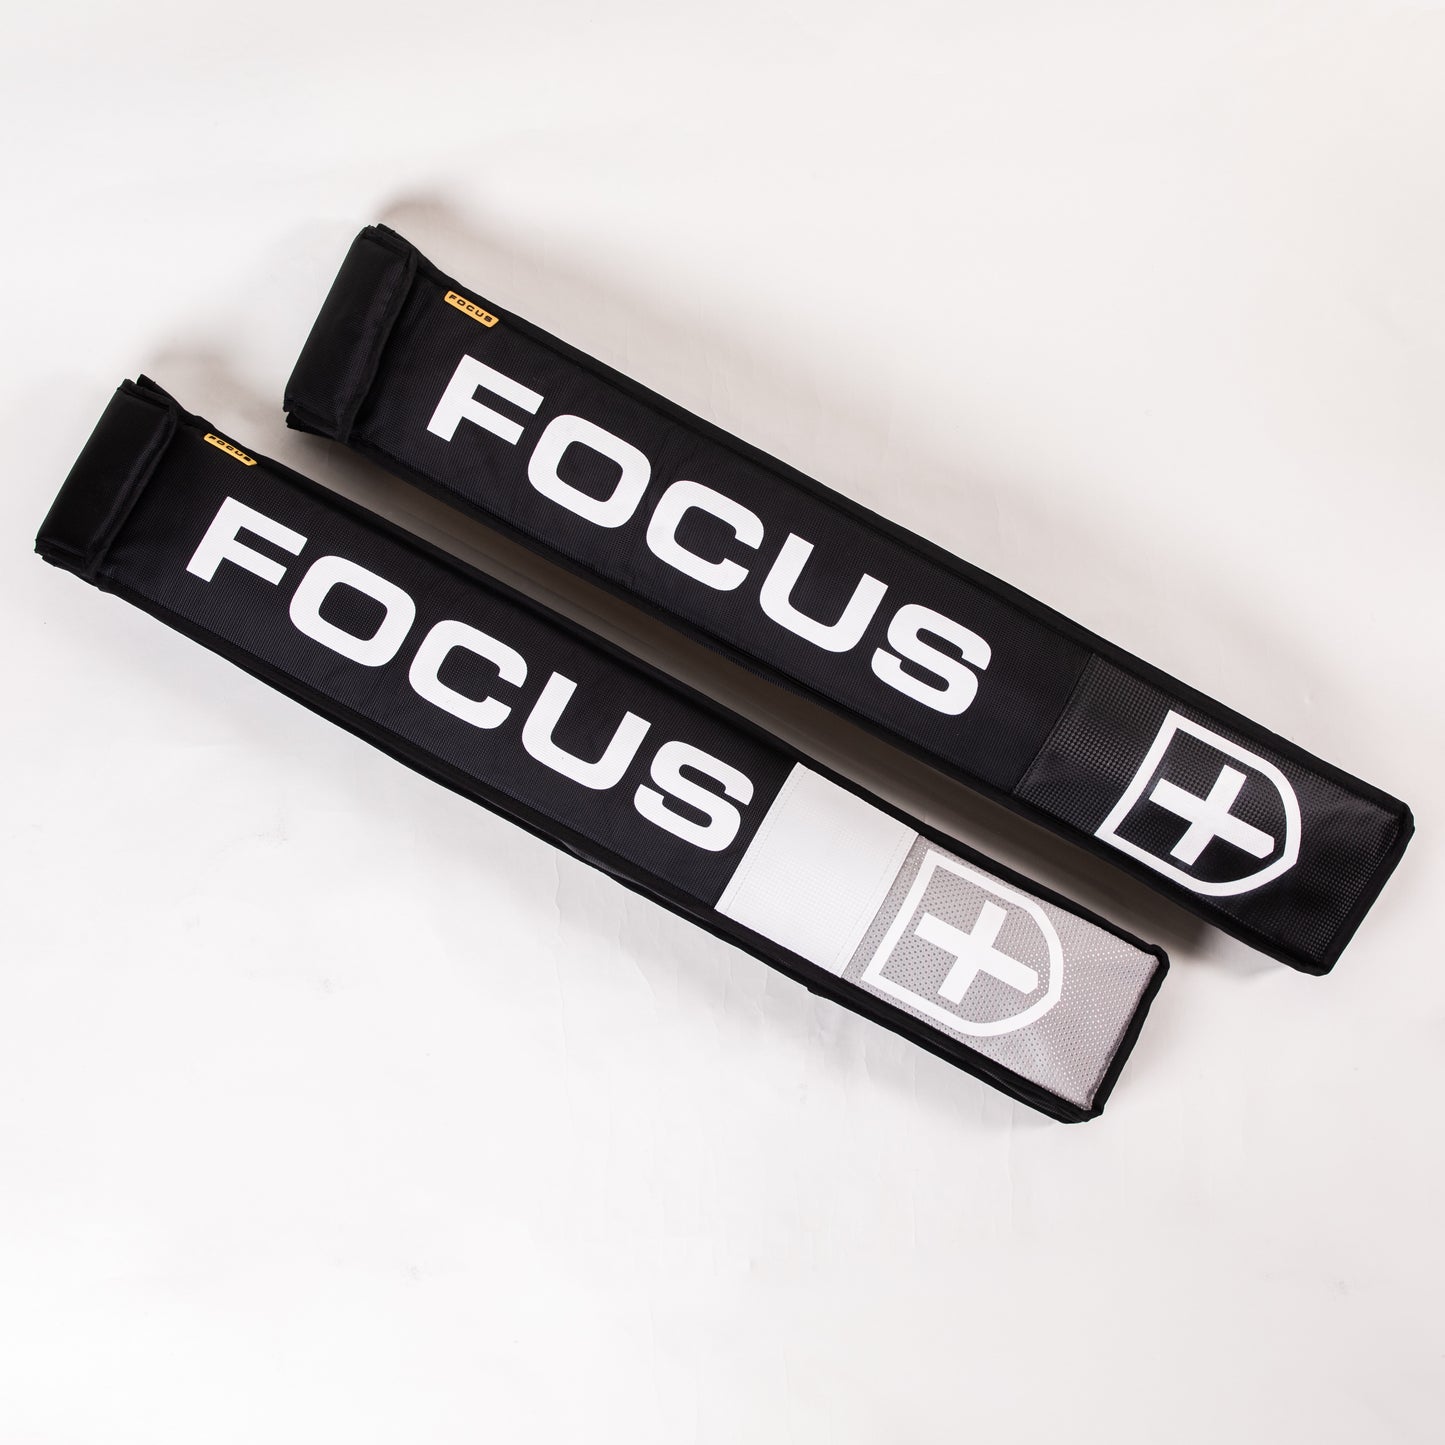 Focus Cricket Bat Covers